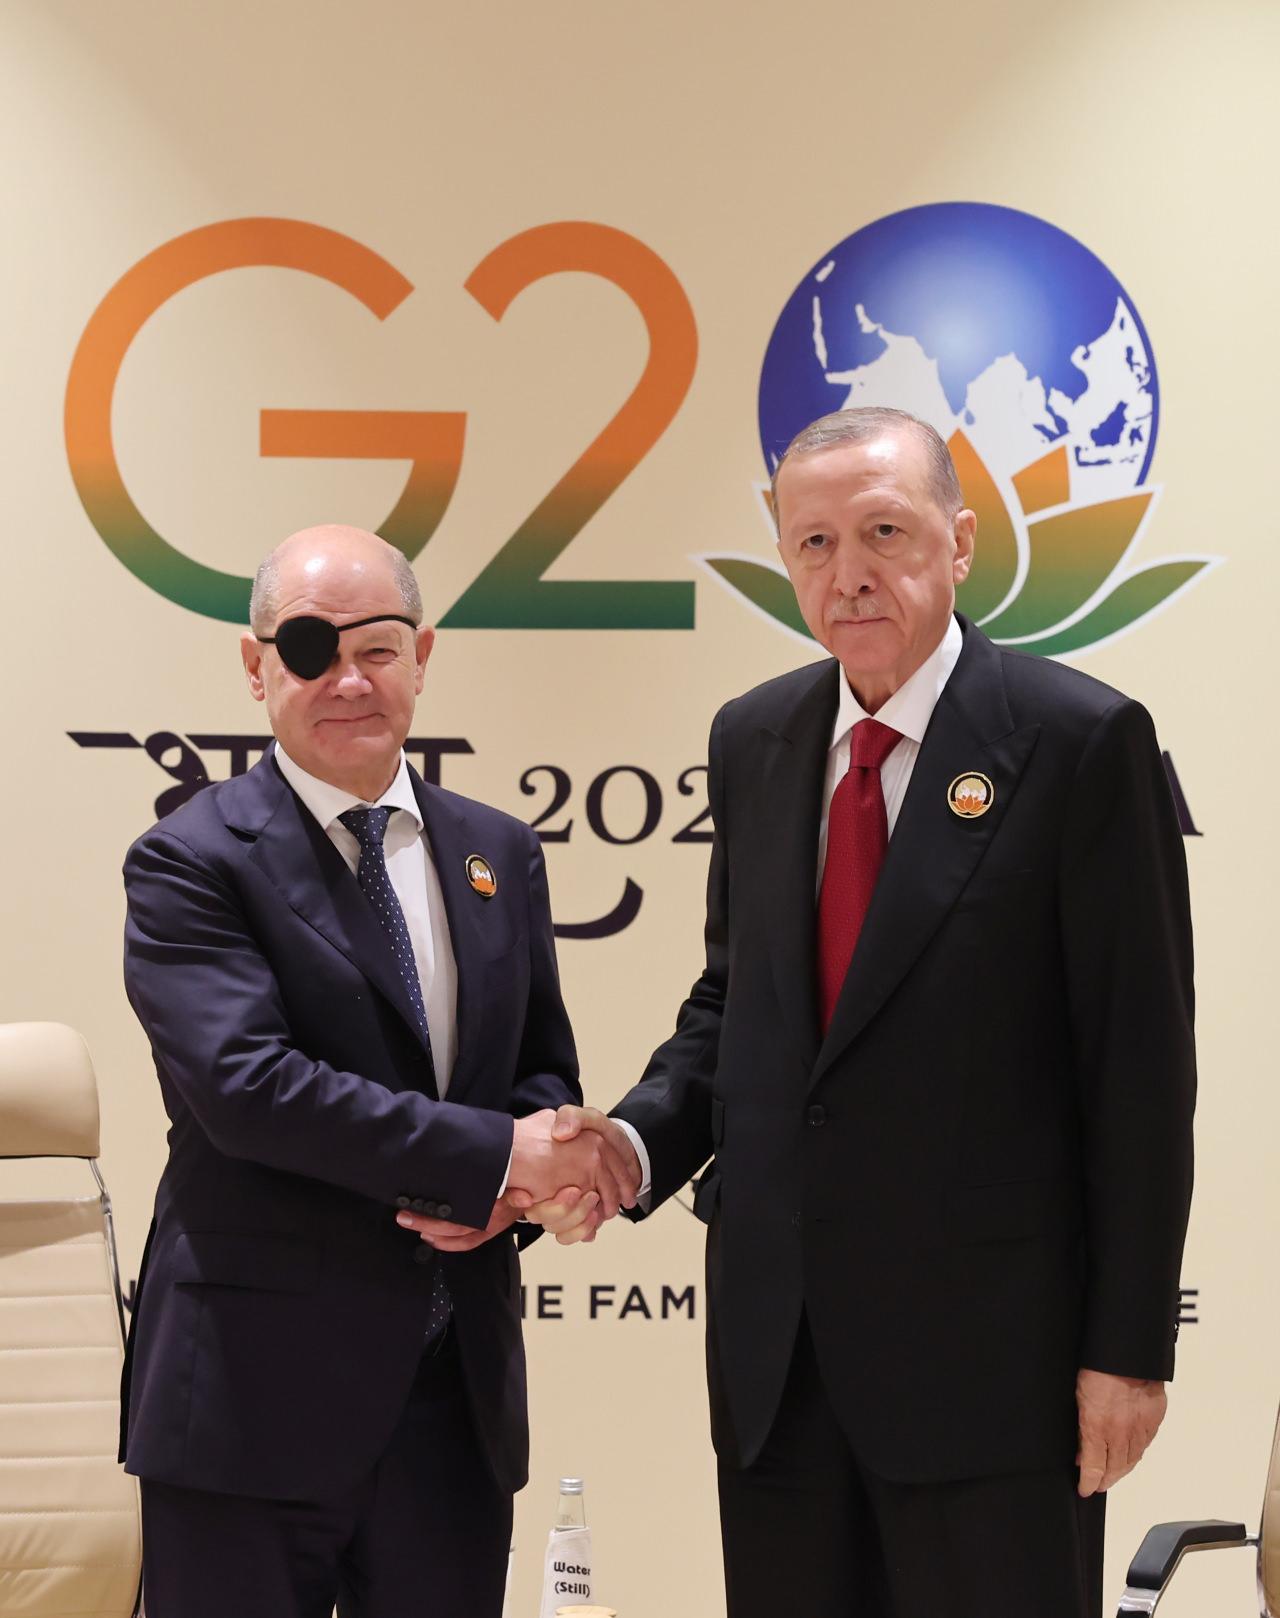 cumhurbaskani erdogan scholzu kabul etti dikkat ceken korsan maske ayrintisi 2 UHQcPzH4